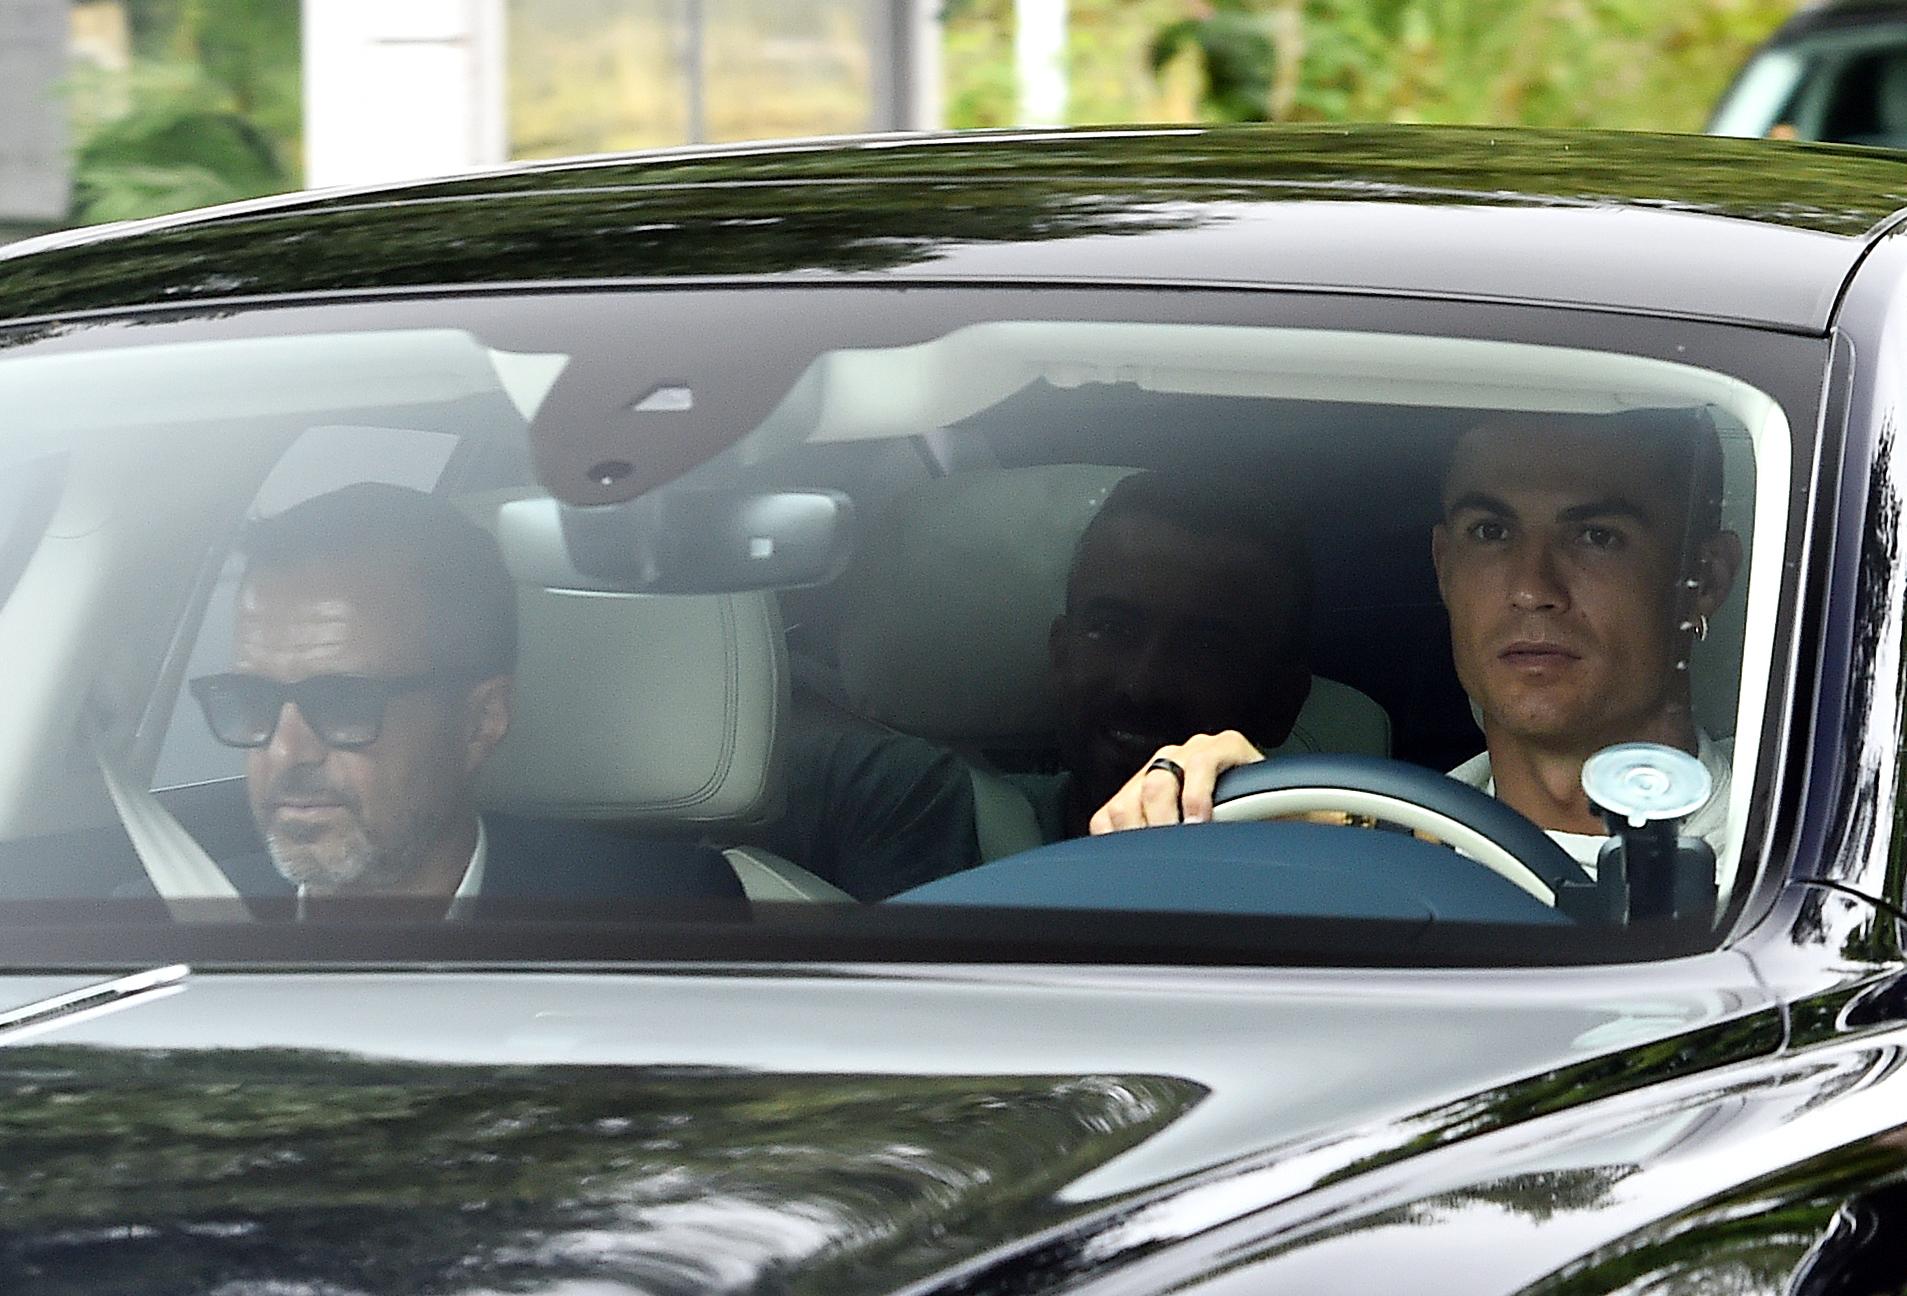 Here’s Ronaldo’s return to Manchester: – Disgraceful retreat